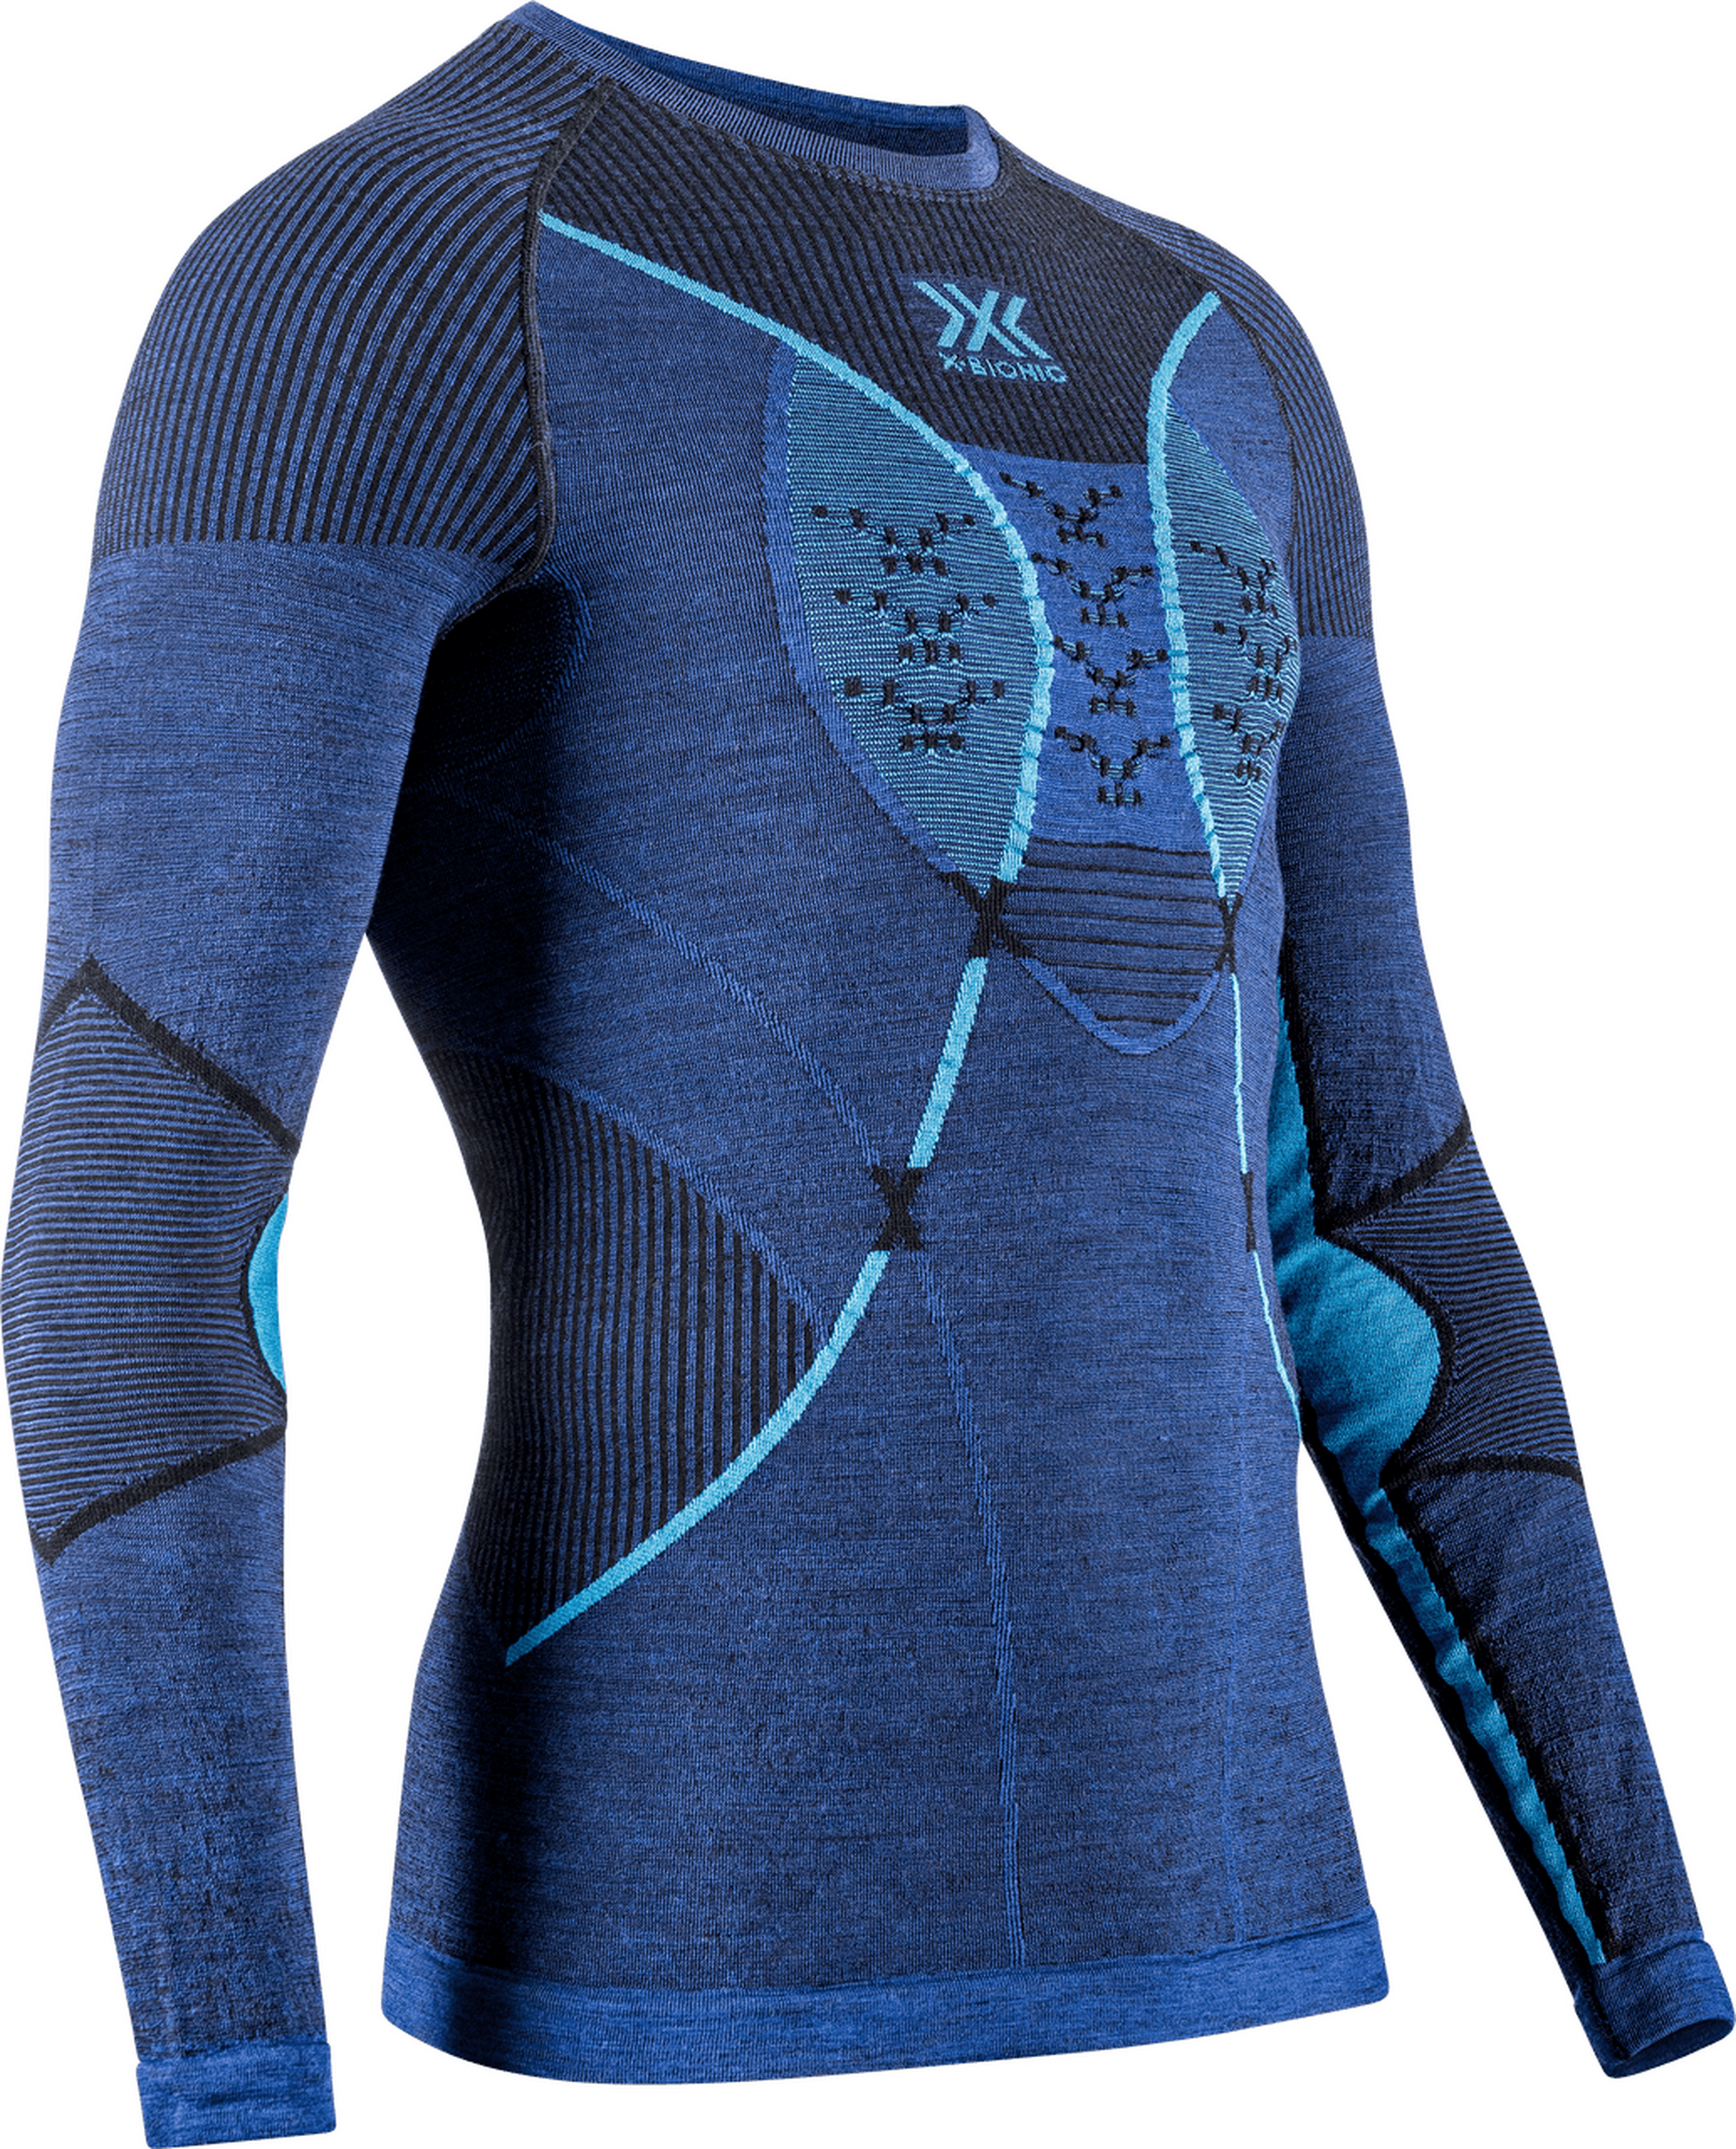 Im Test: X-Bionic Merino Shirt LG SL Damen